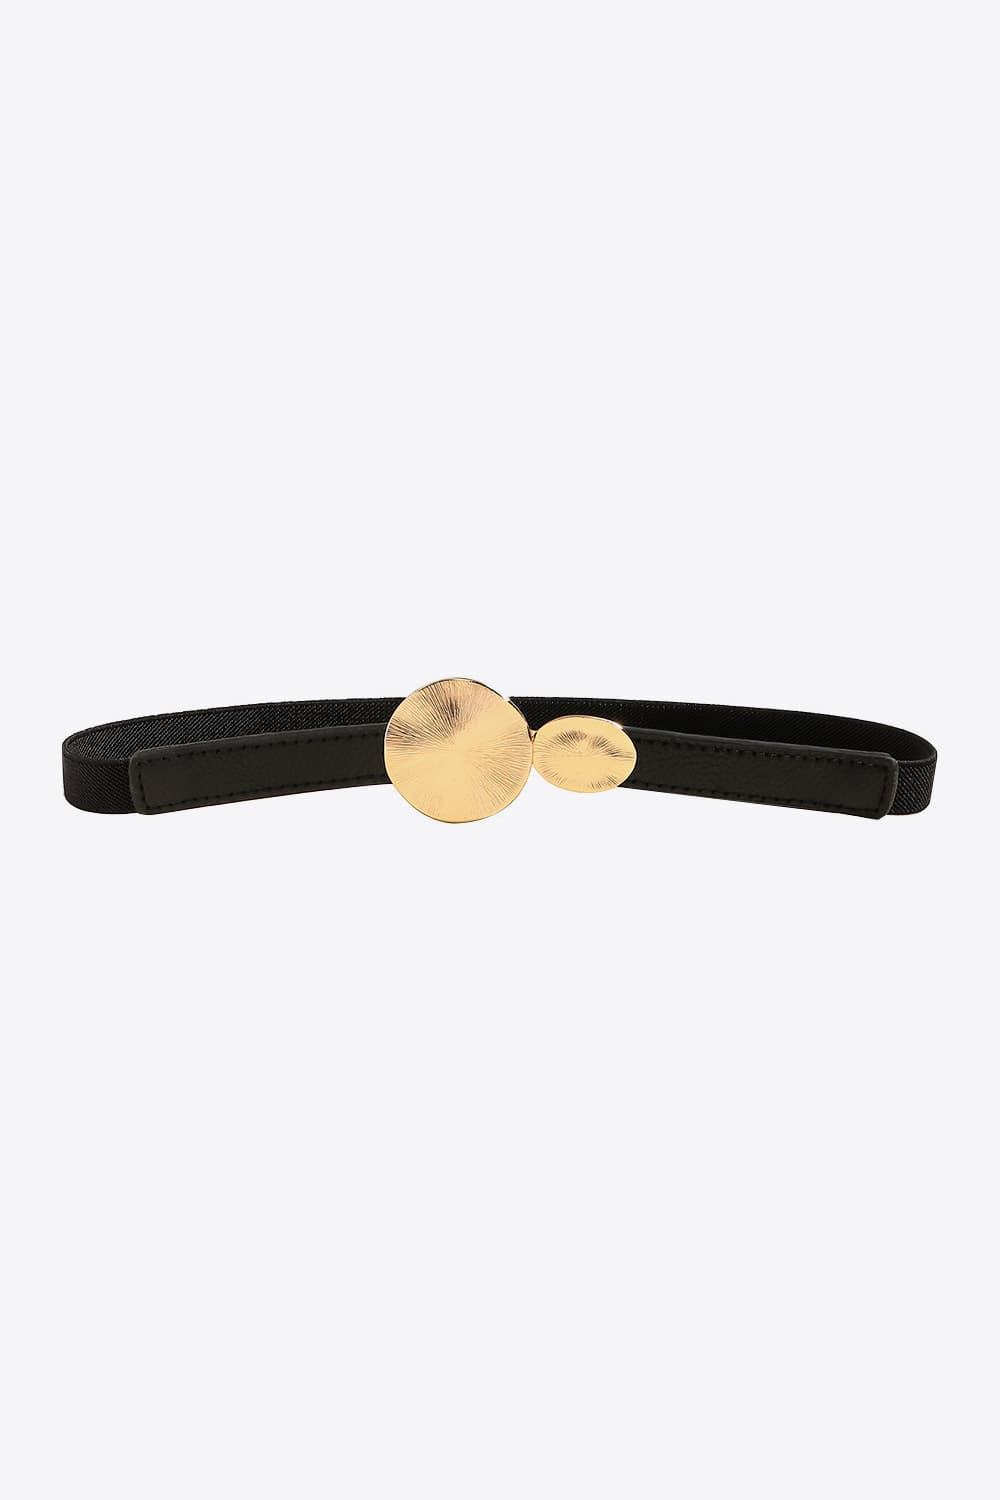 PU Leather Belt - Black / One Size